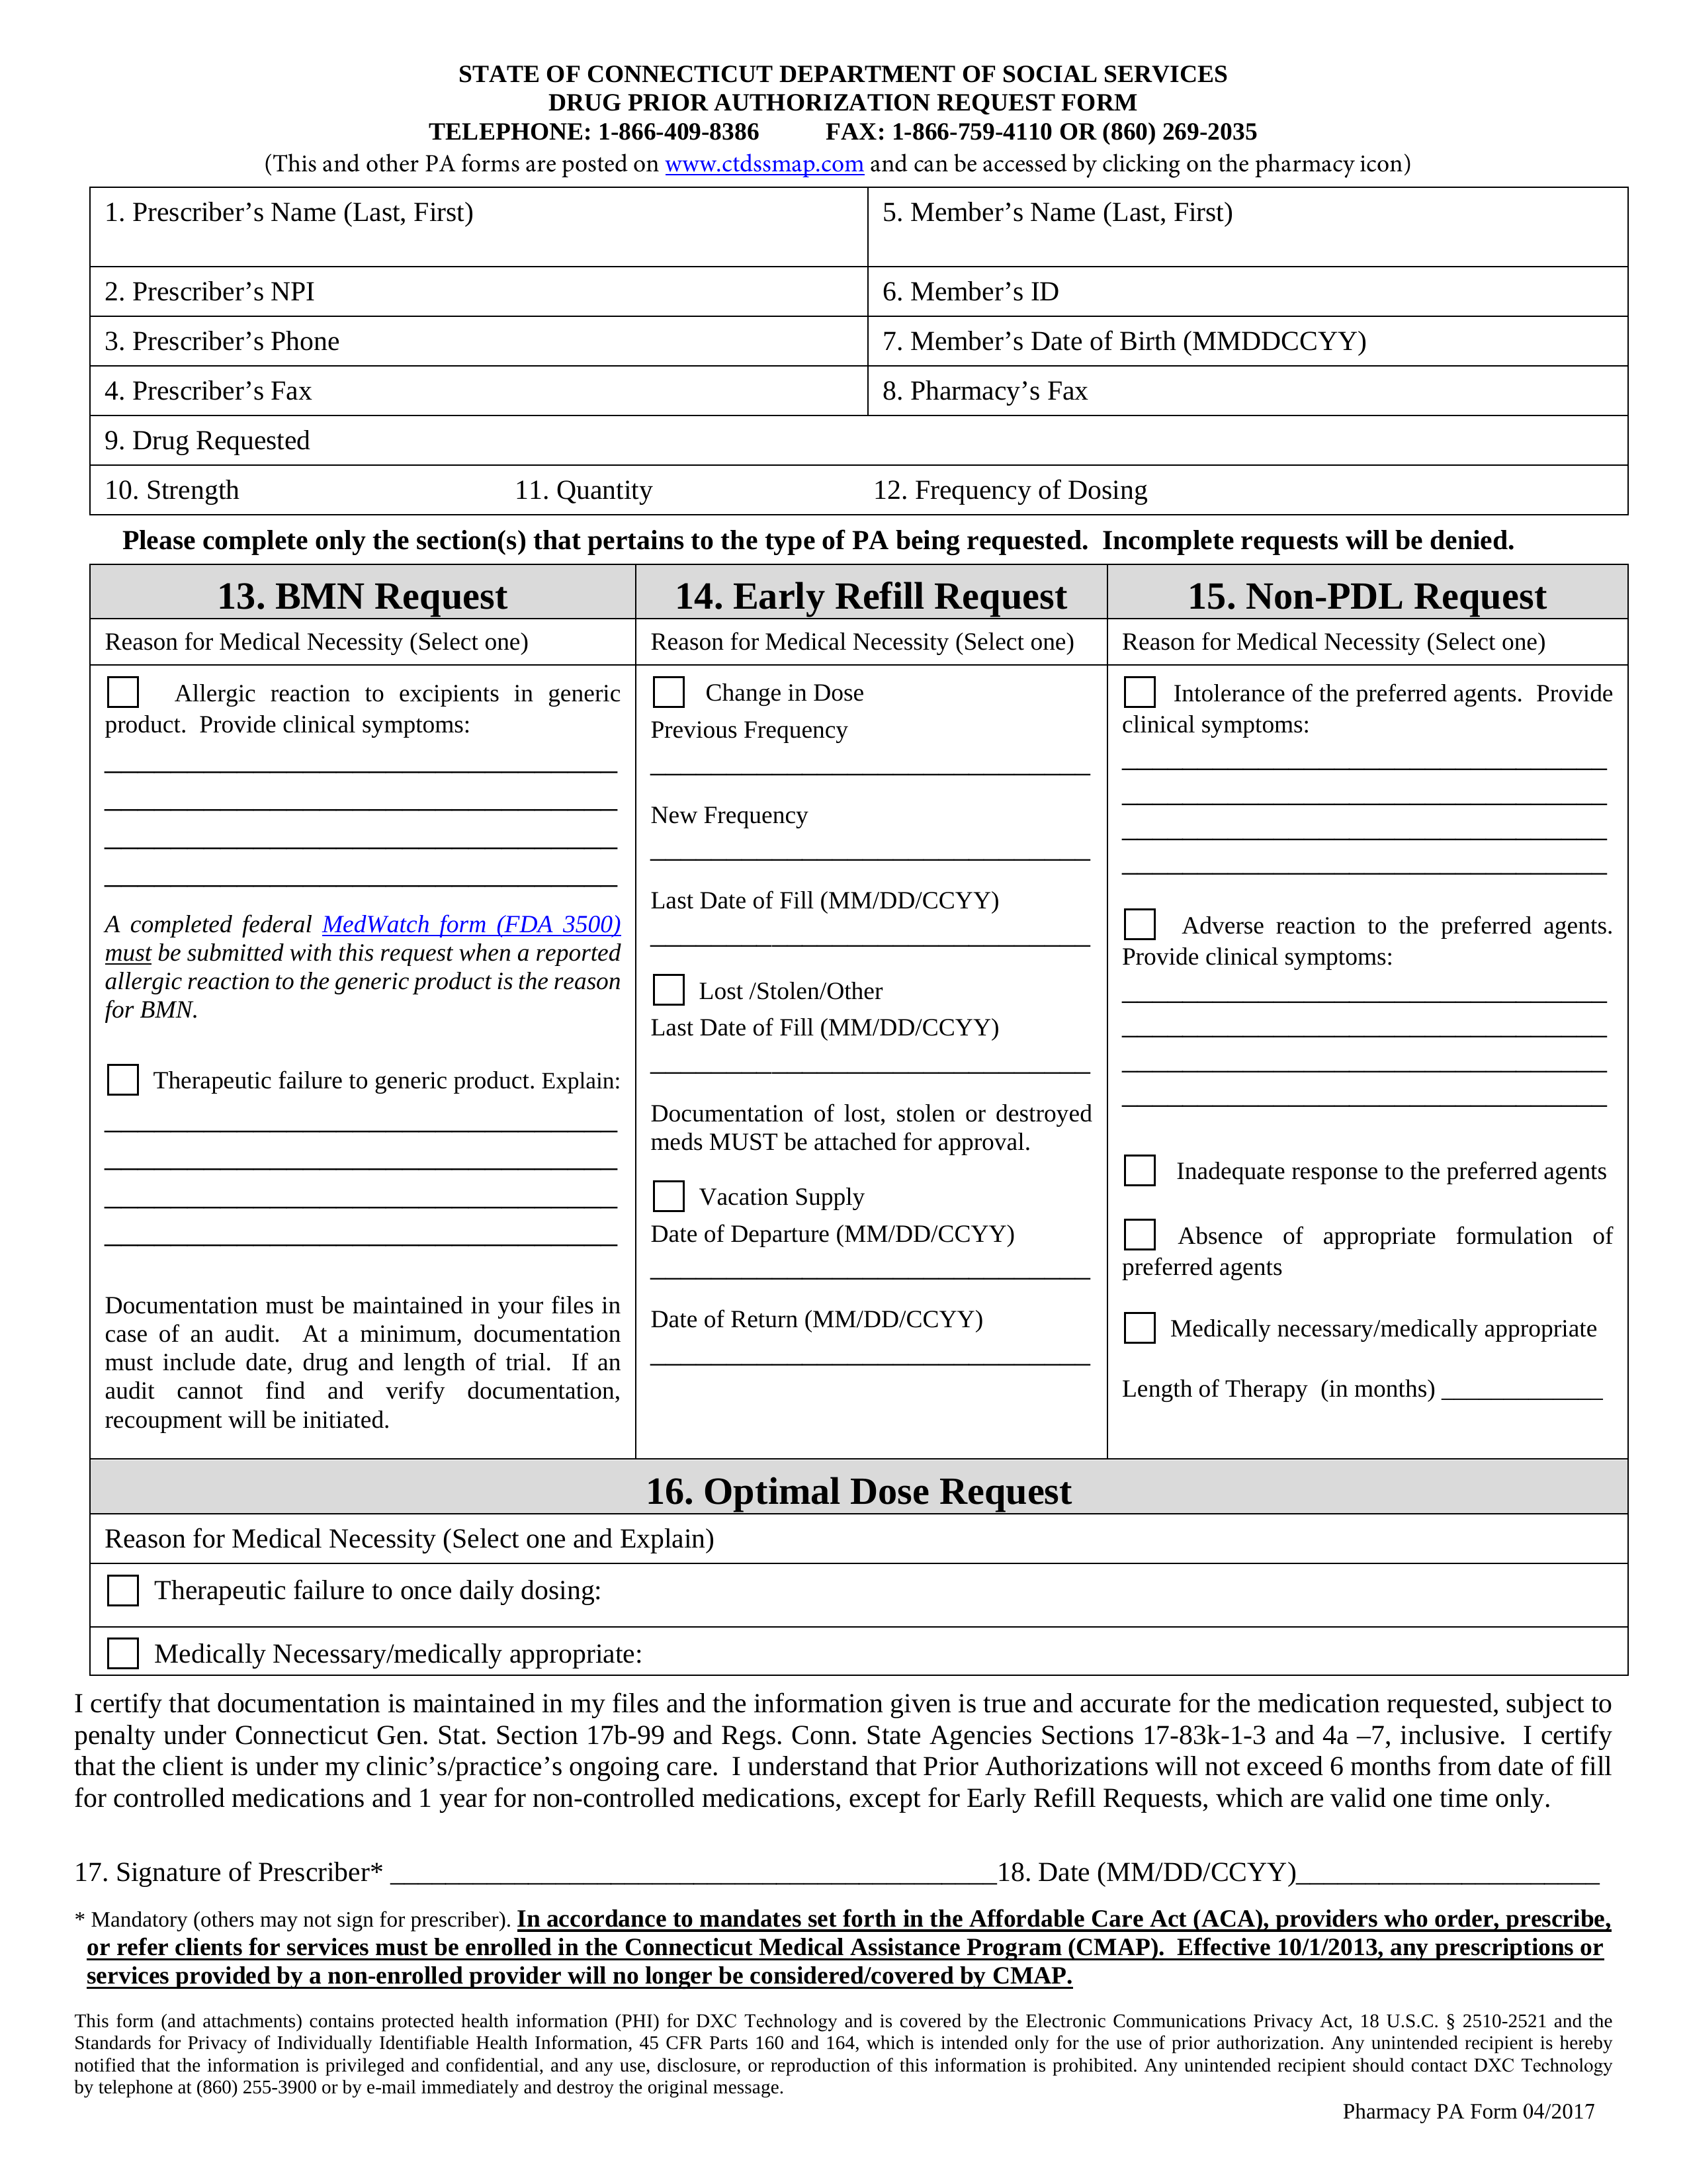 Connecticut Medicaid Prior (Rx) Authorization Form